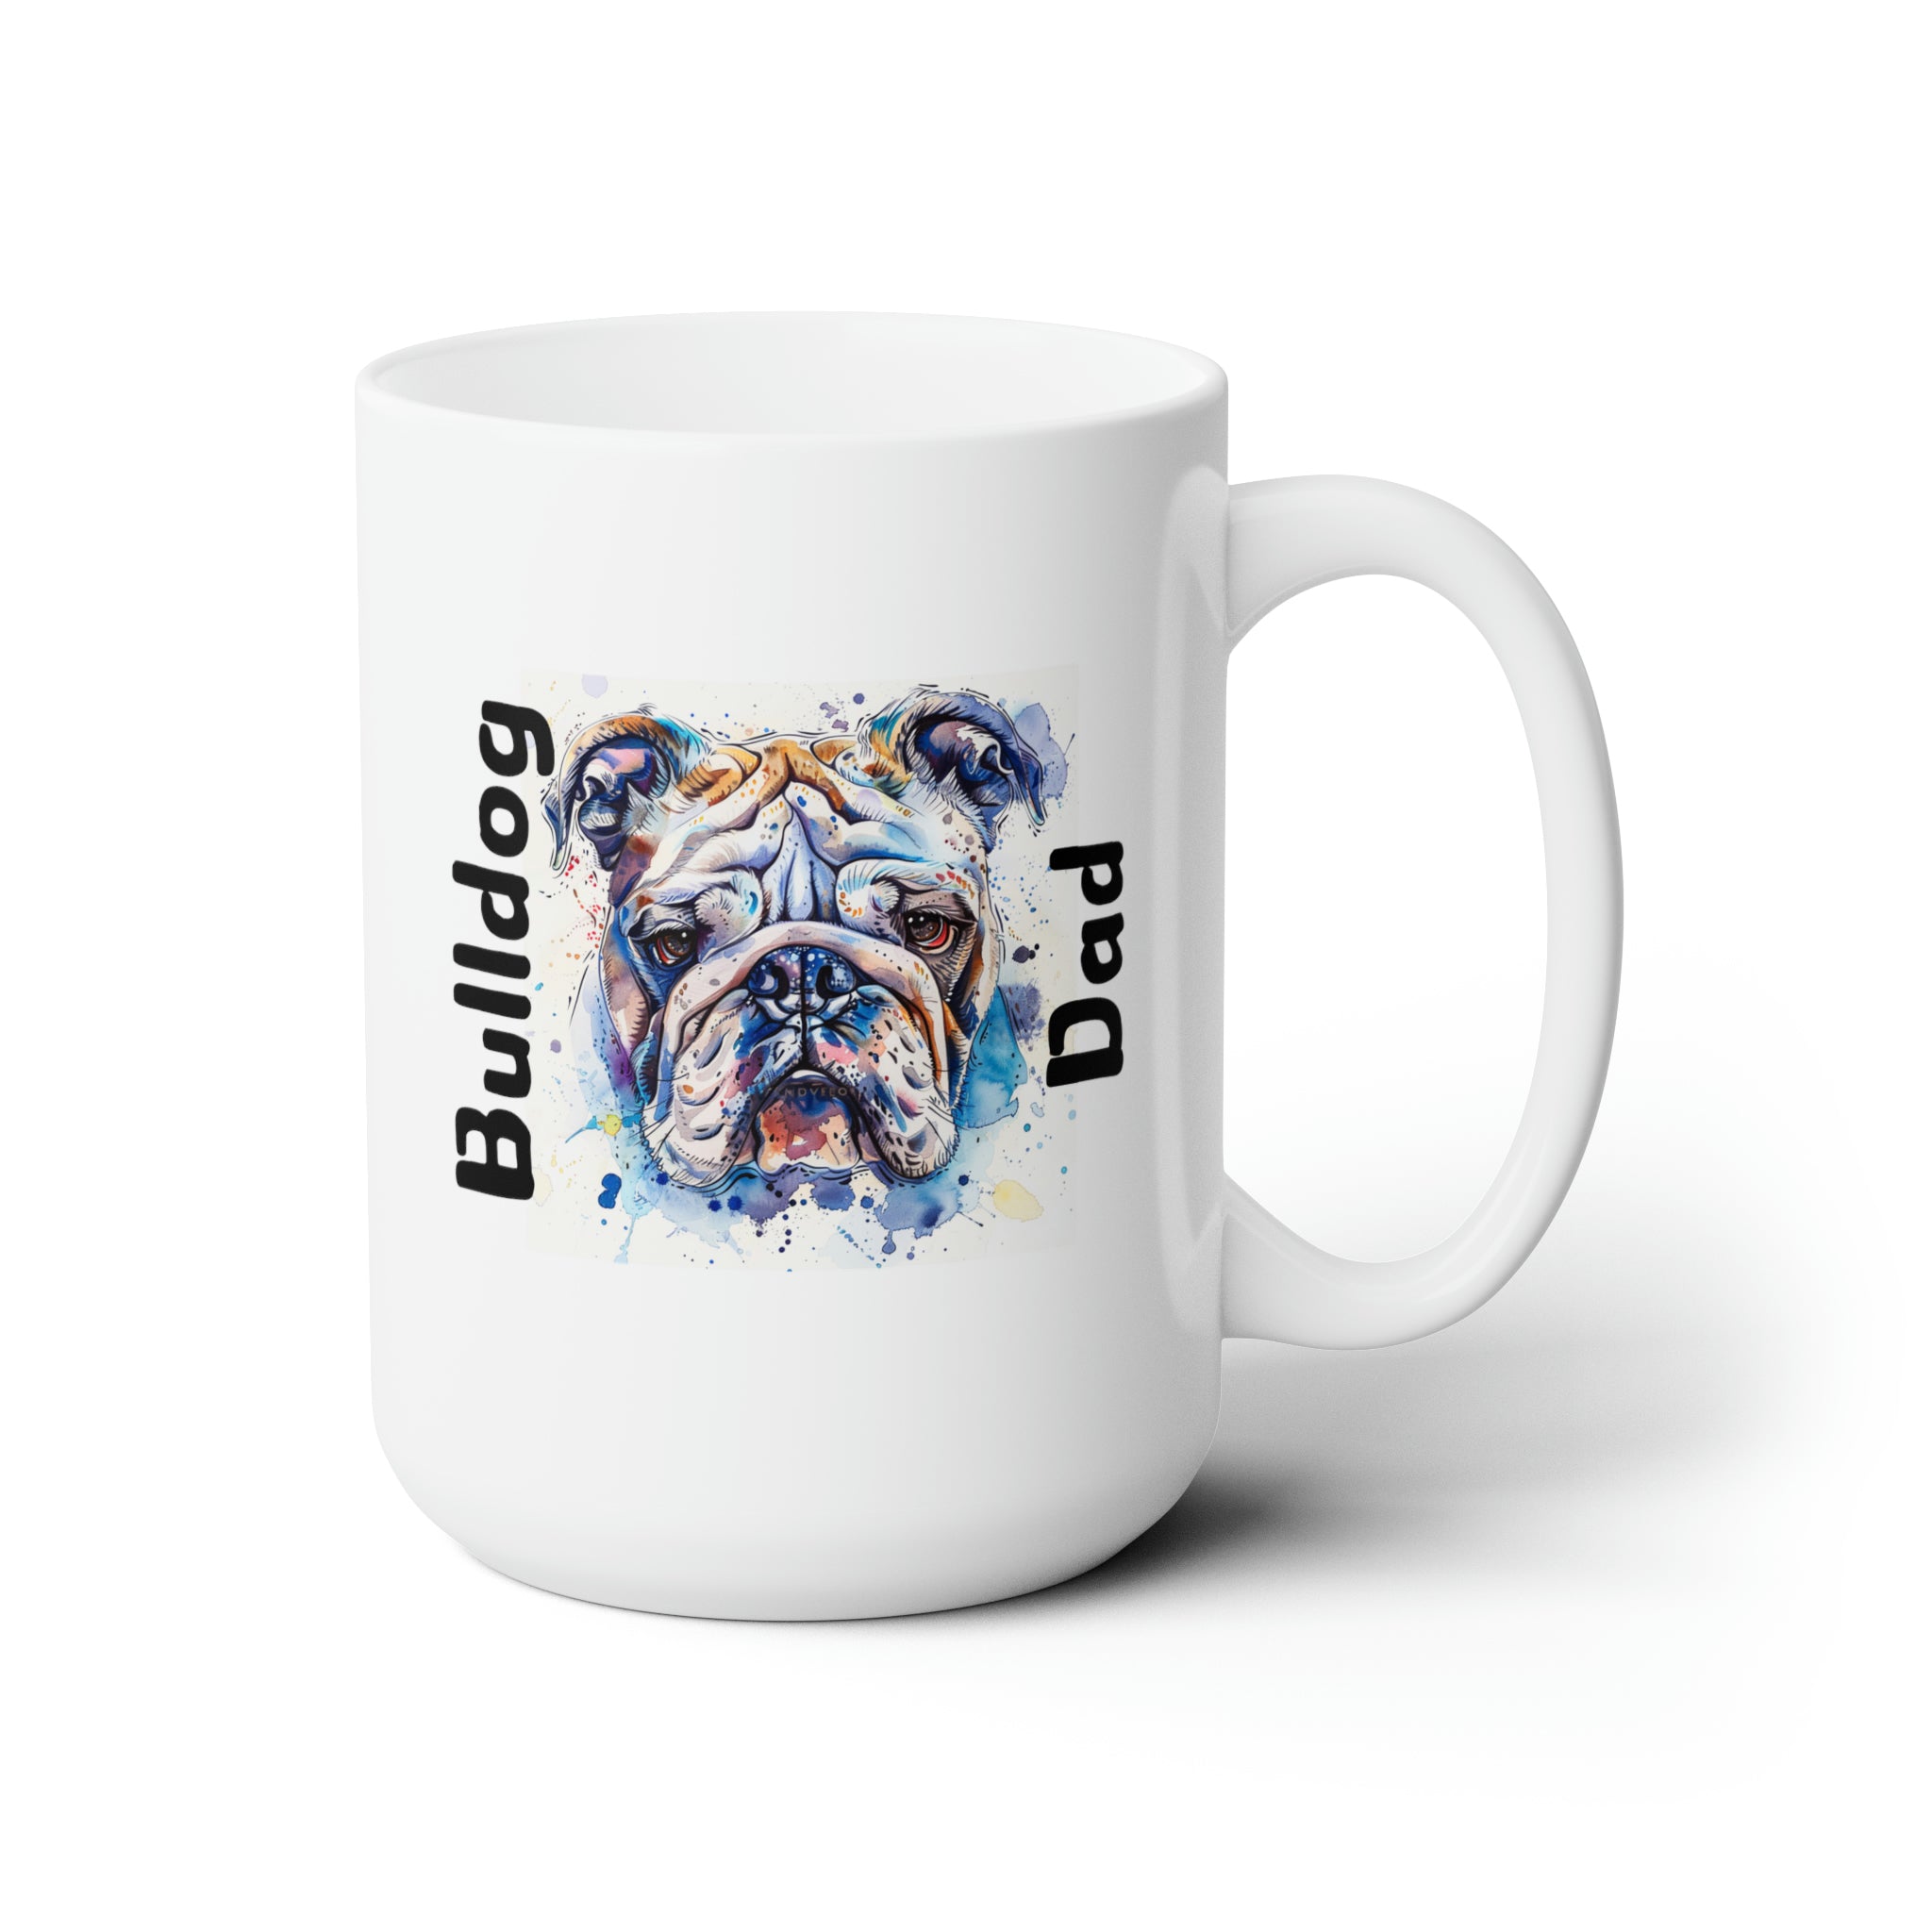 "Bulldog Dad" Coffee Mug